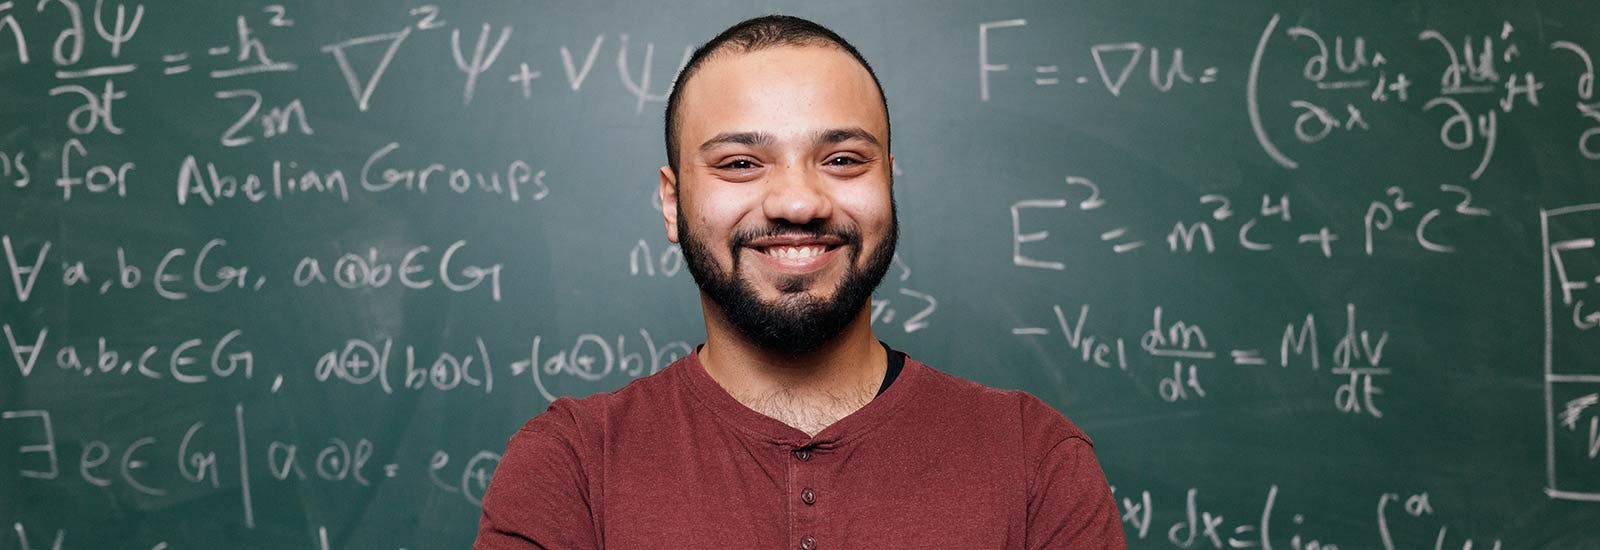 Surrey student smiling in front of blackboard